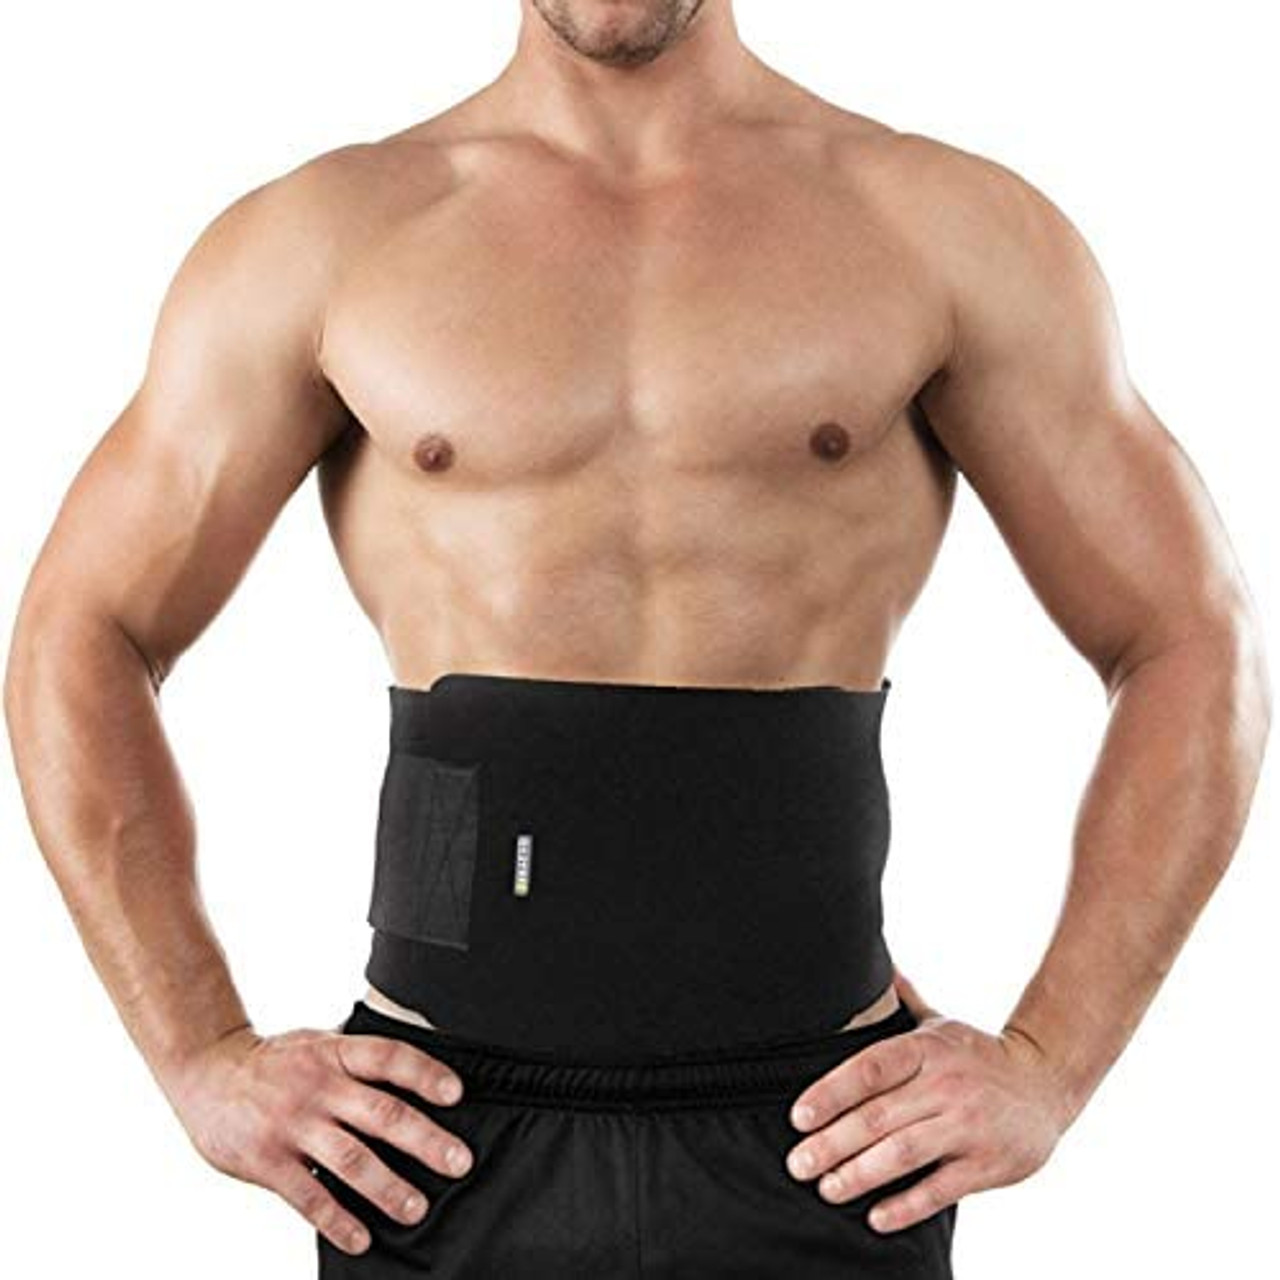 VibeX ™ POWER Hot shapers Waist Trainer Slimming Belt Price in